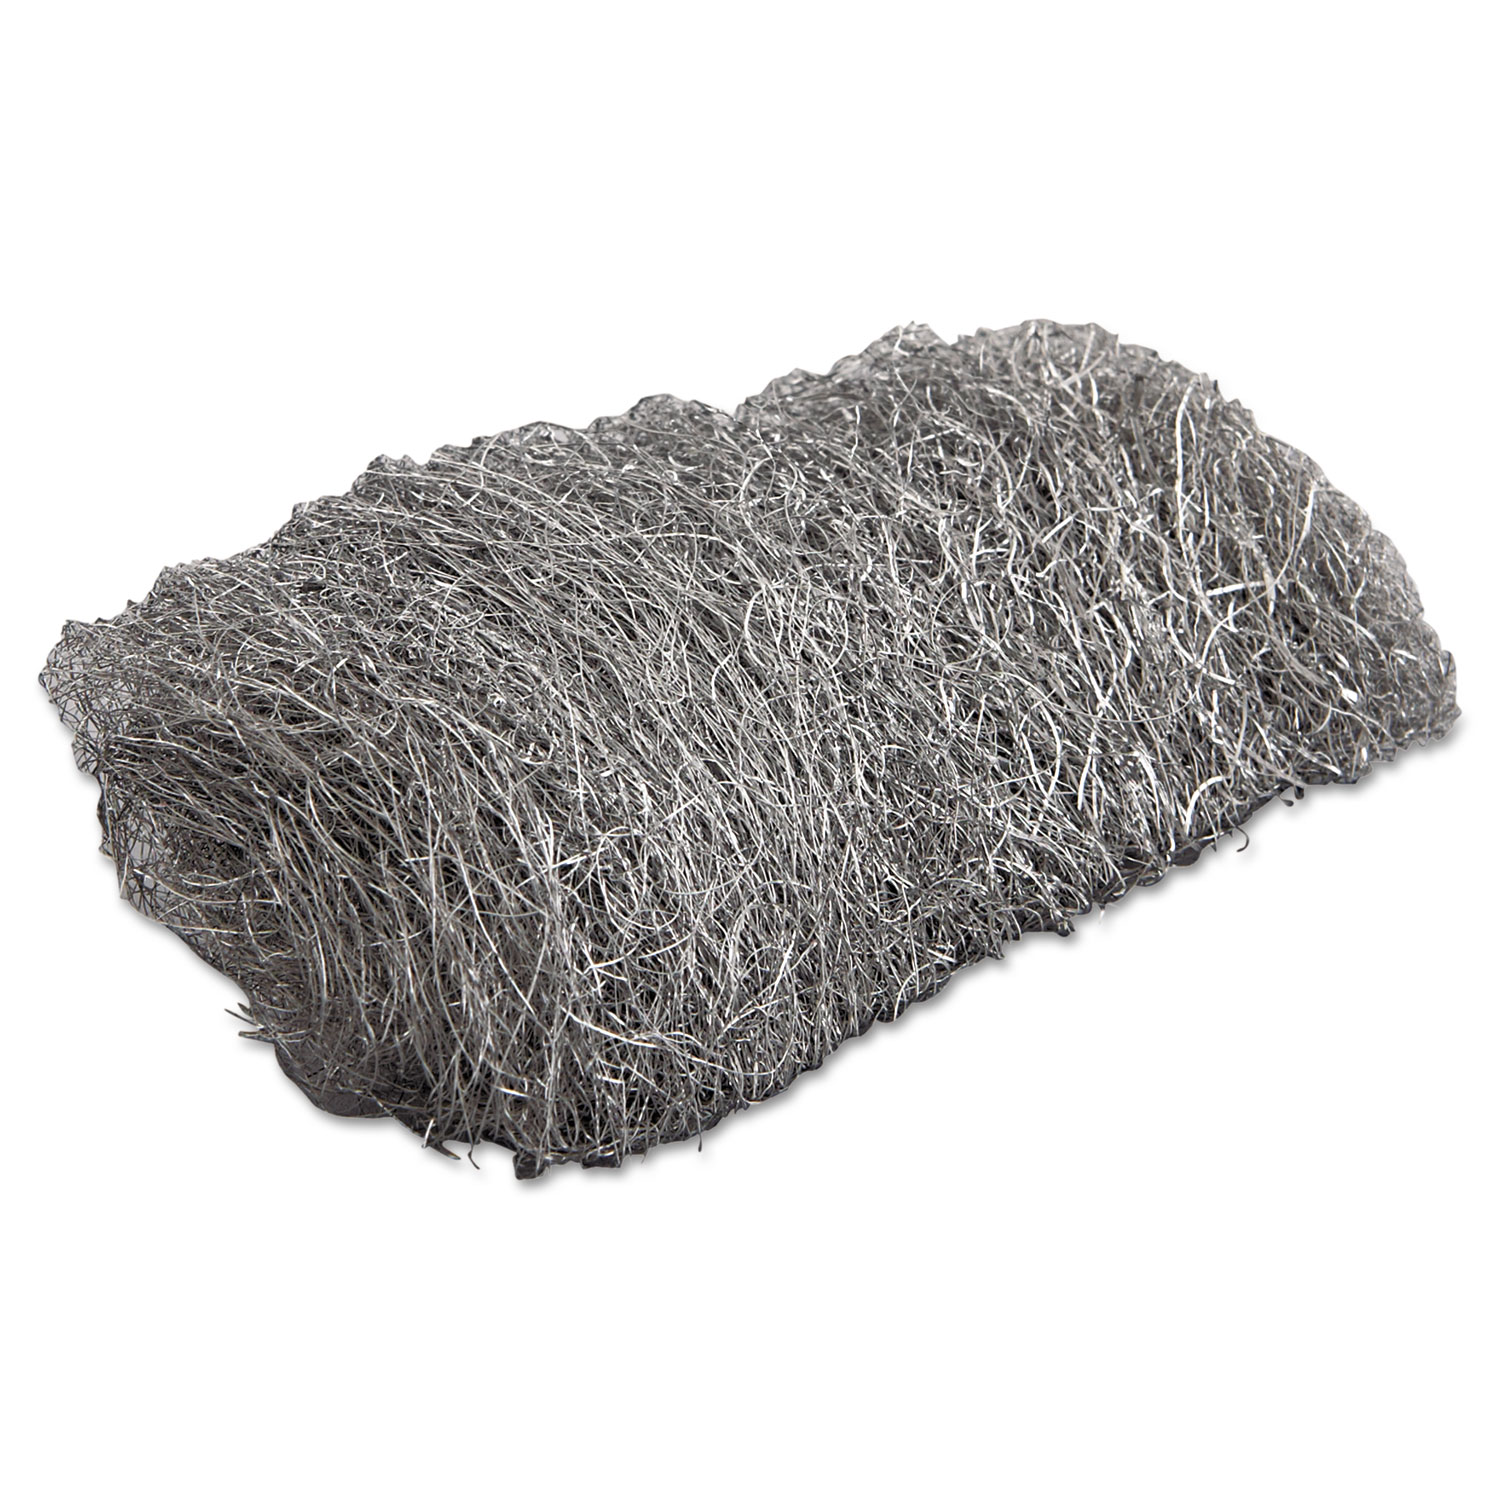 Industrial-Quality Steel Wool Reel, #2 Medium Coarse, 5lb Reel, 6/Carton